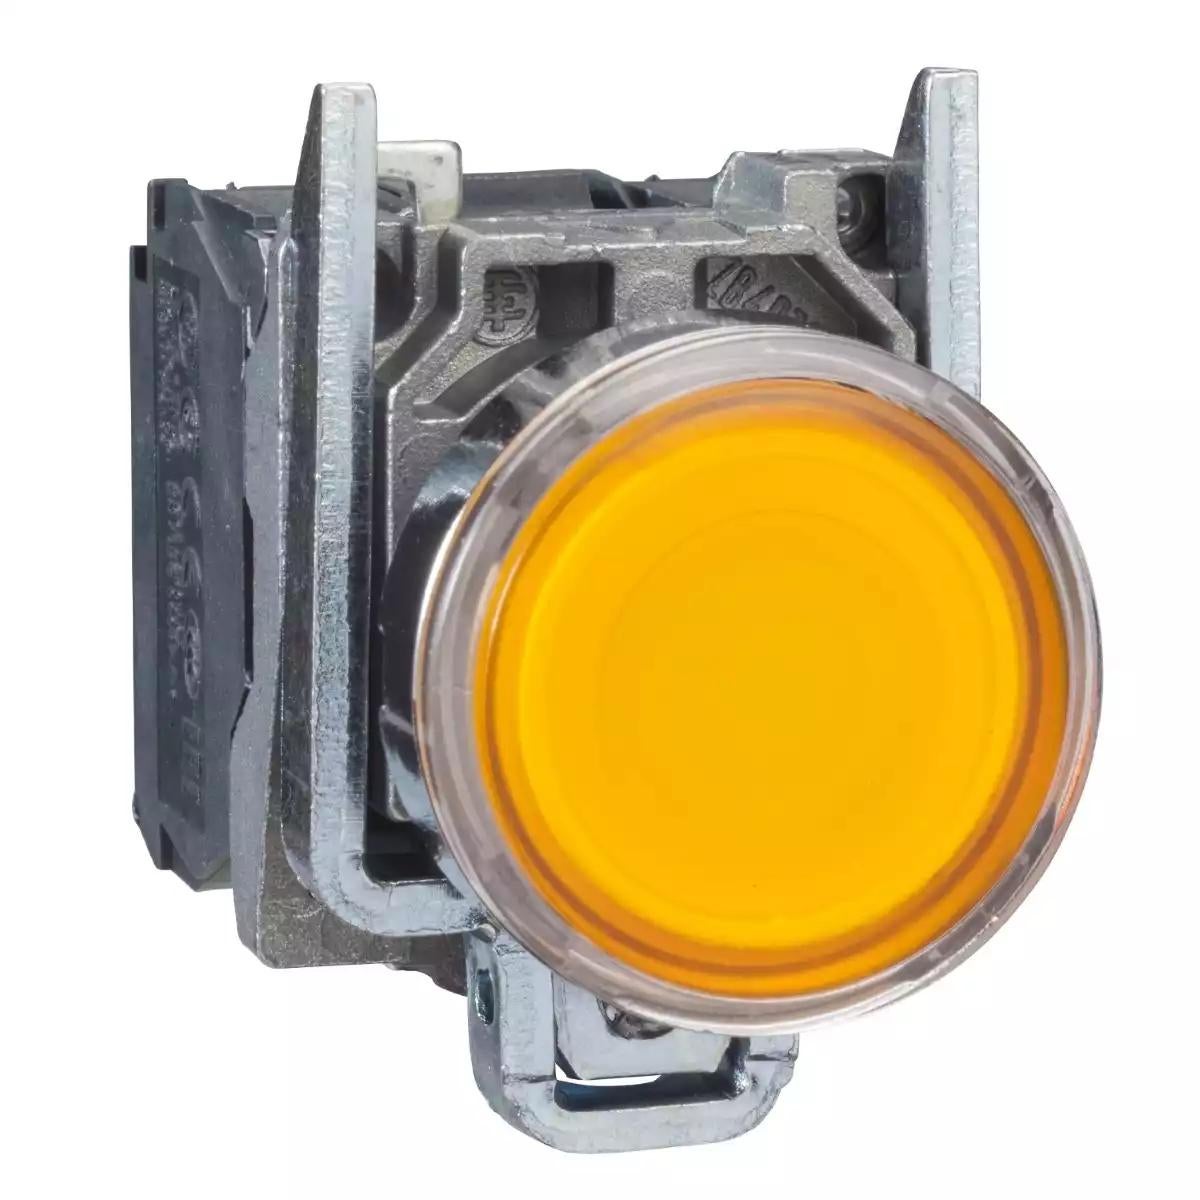 Schneider Electric Harmony XB4 orange flush complete illum pushbutton Ã˜22 spring return 1NO+1NC 110...120V